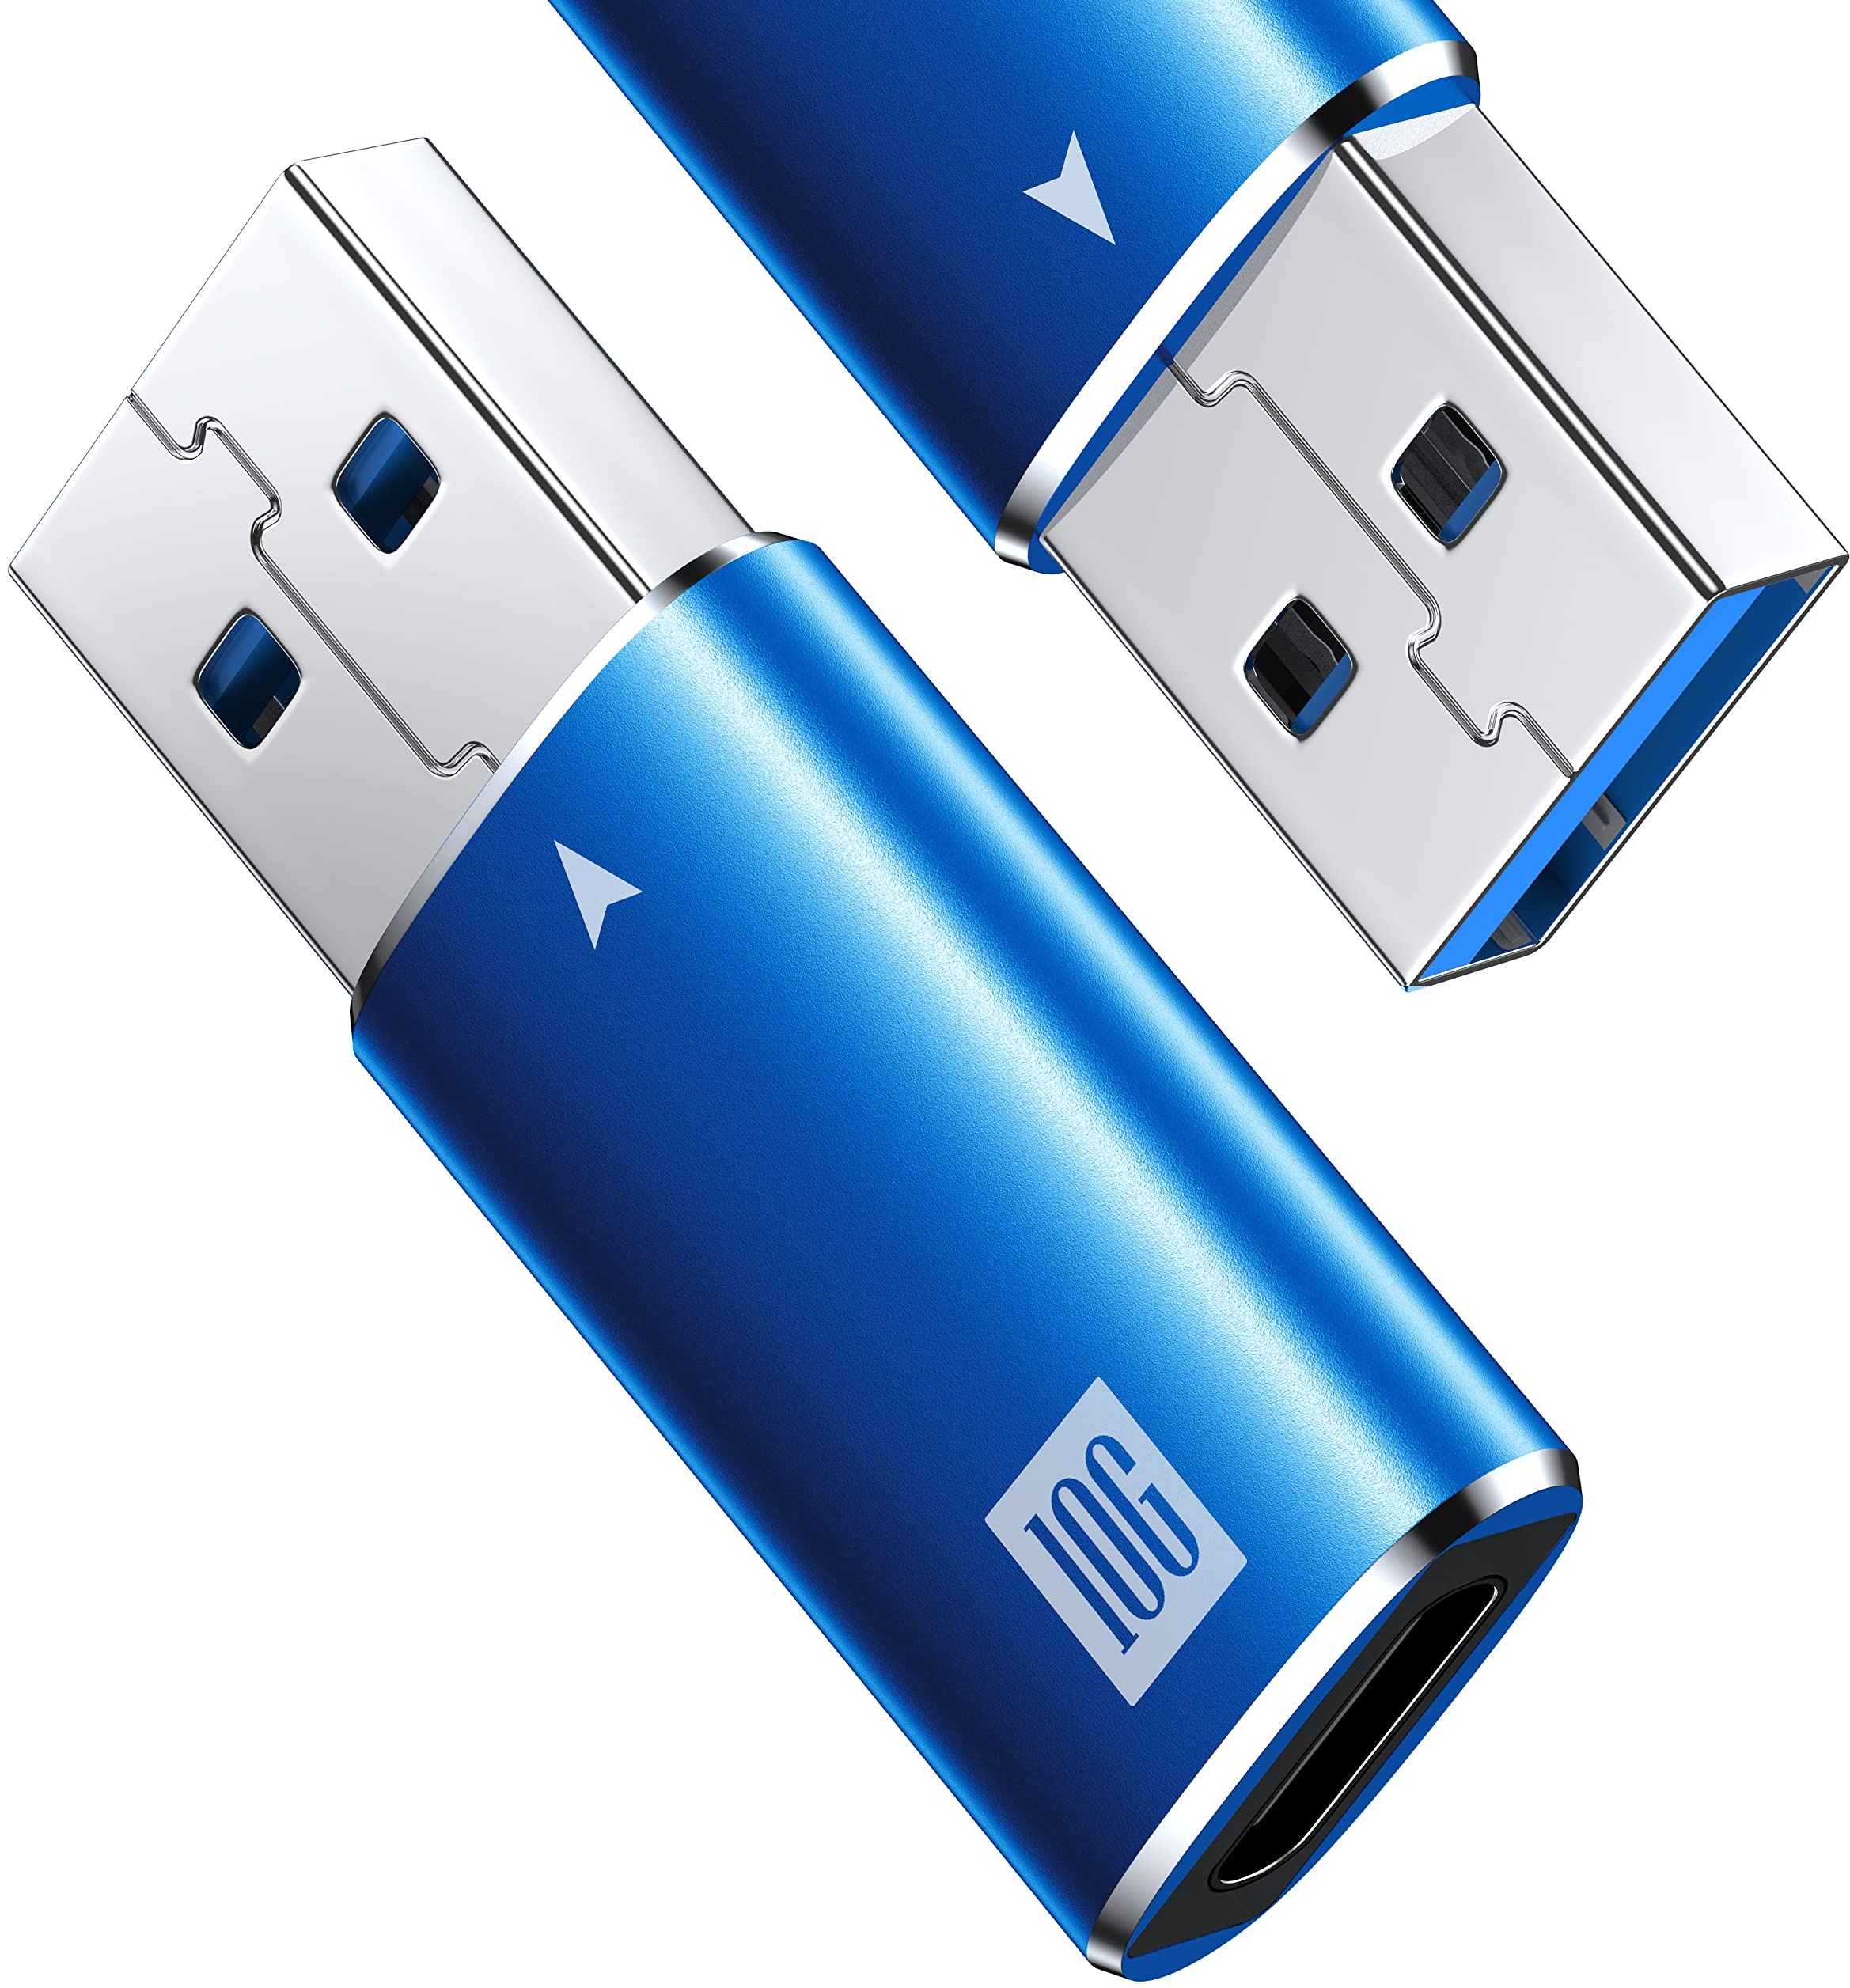 [10Gbps] USB C Buchse zu USB Stecker Adapter 2 Pack, USB 3.1 A zu USB C Adapter SuperSpeed Data Sync. Kompatibel mit iPhone 12 Mini/12 Pro Max, Typ-C Kopfhörer, Power Bank, Quest Link- Blau